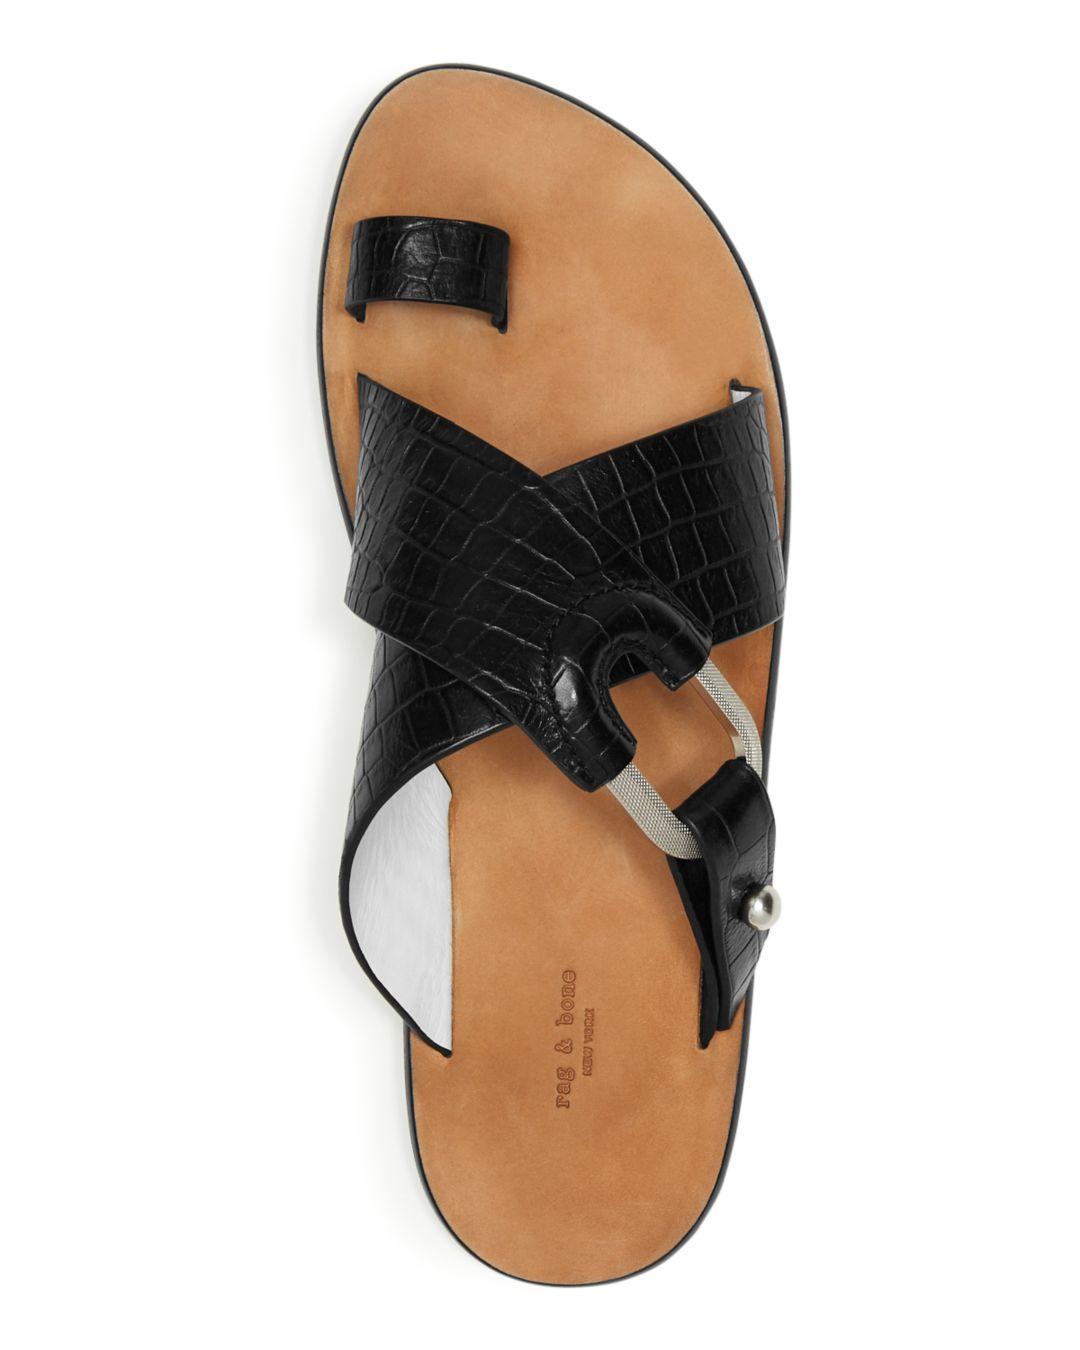 Rag & Bone August Slide - Leather Flat Sandal - Save 75% - Lyst